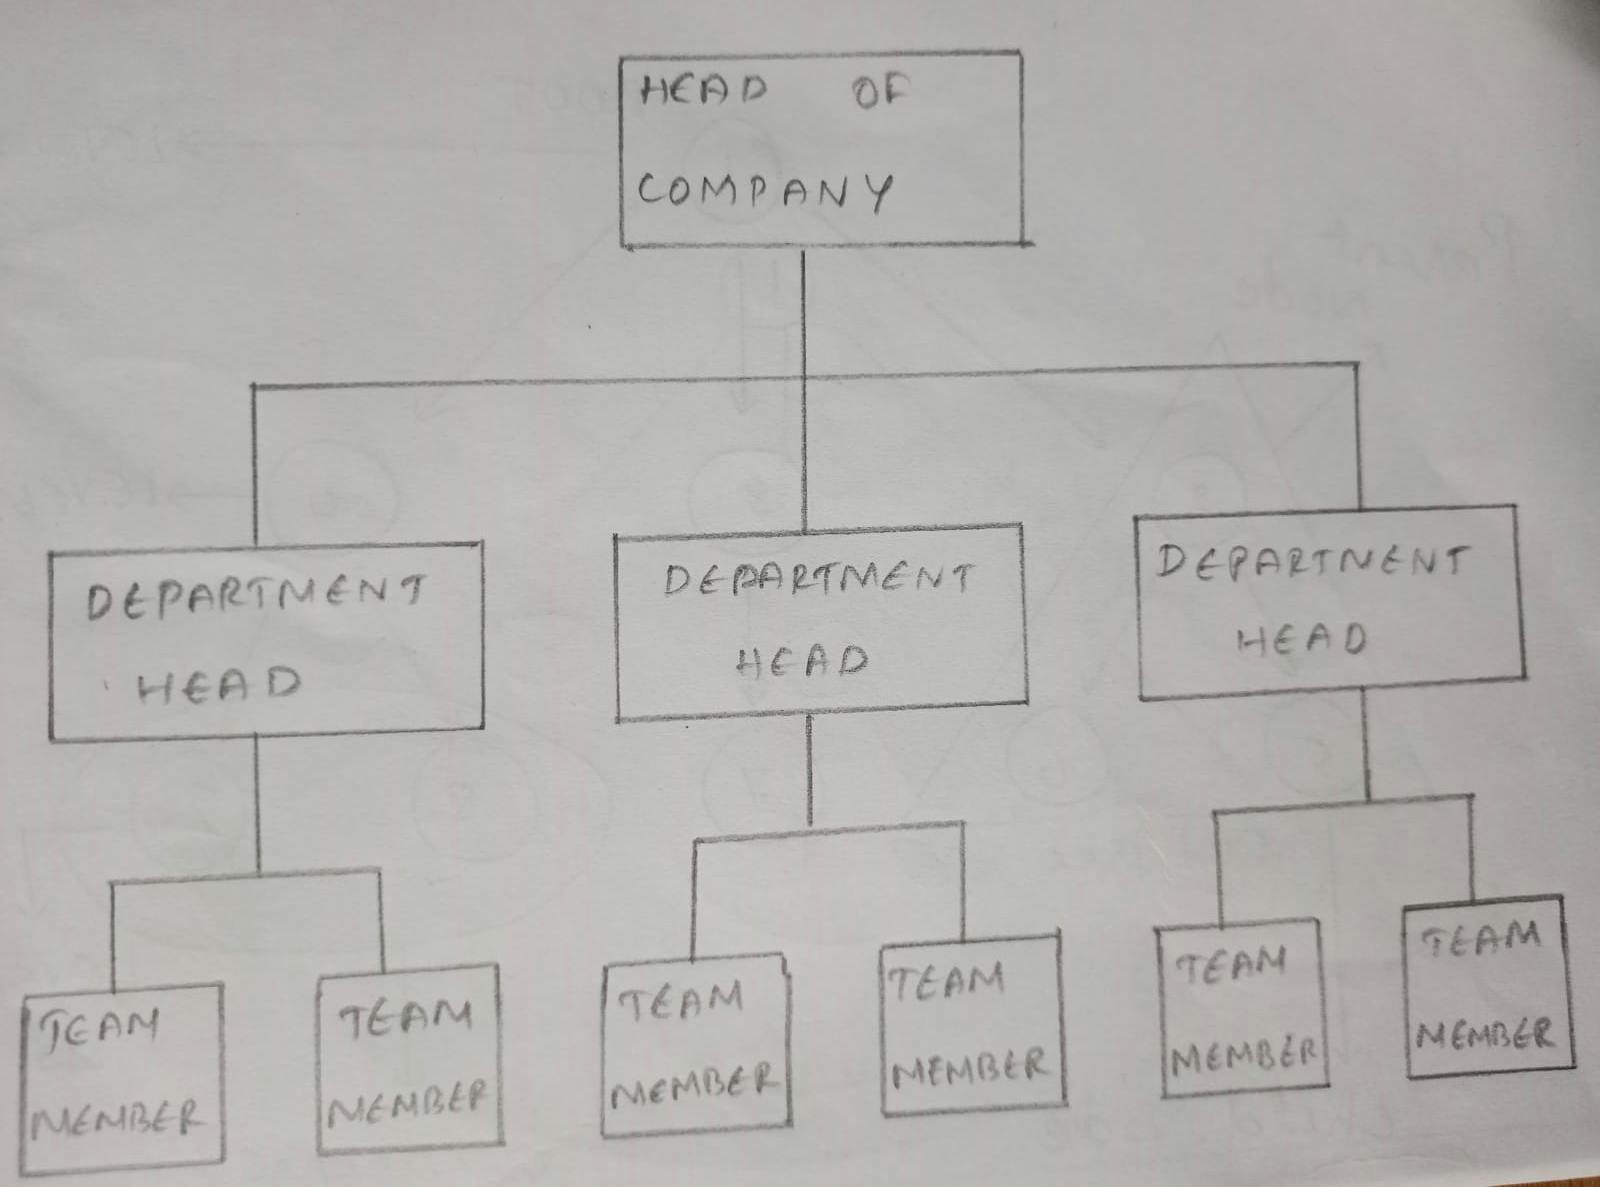 Company_hierarchy.jpeg